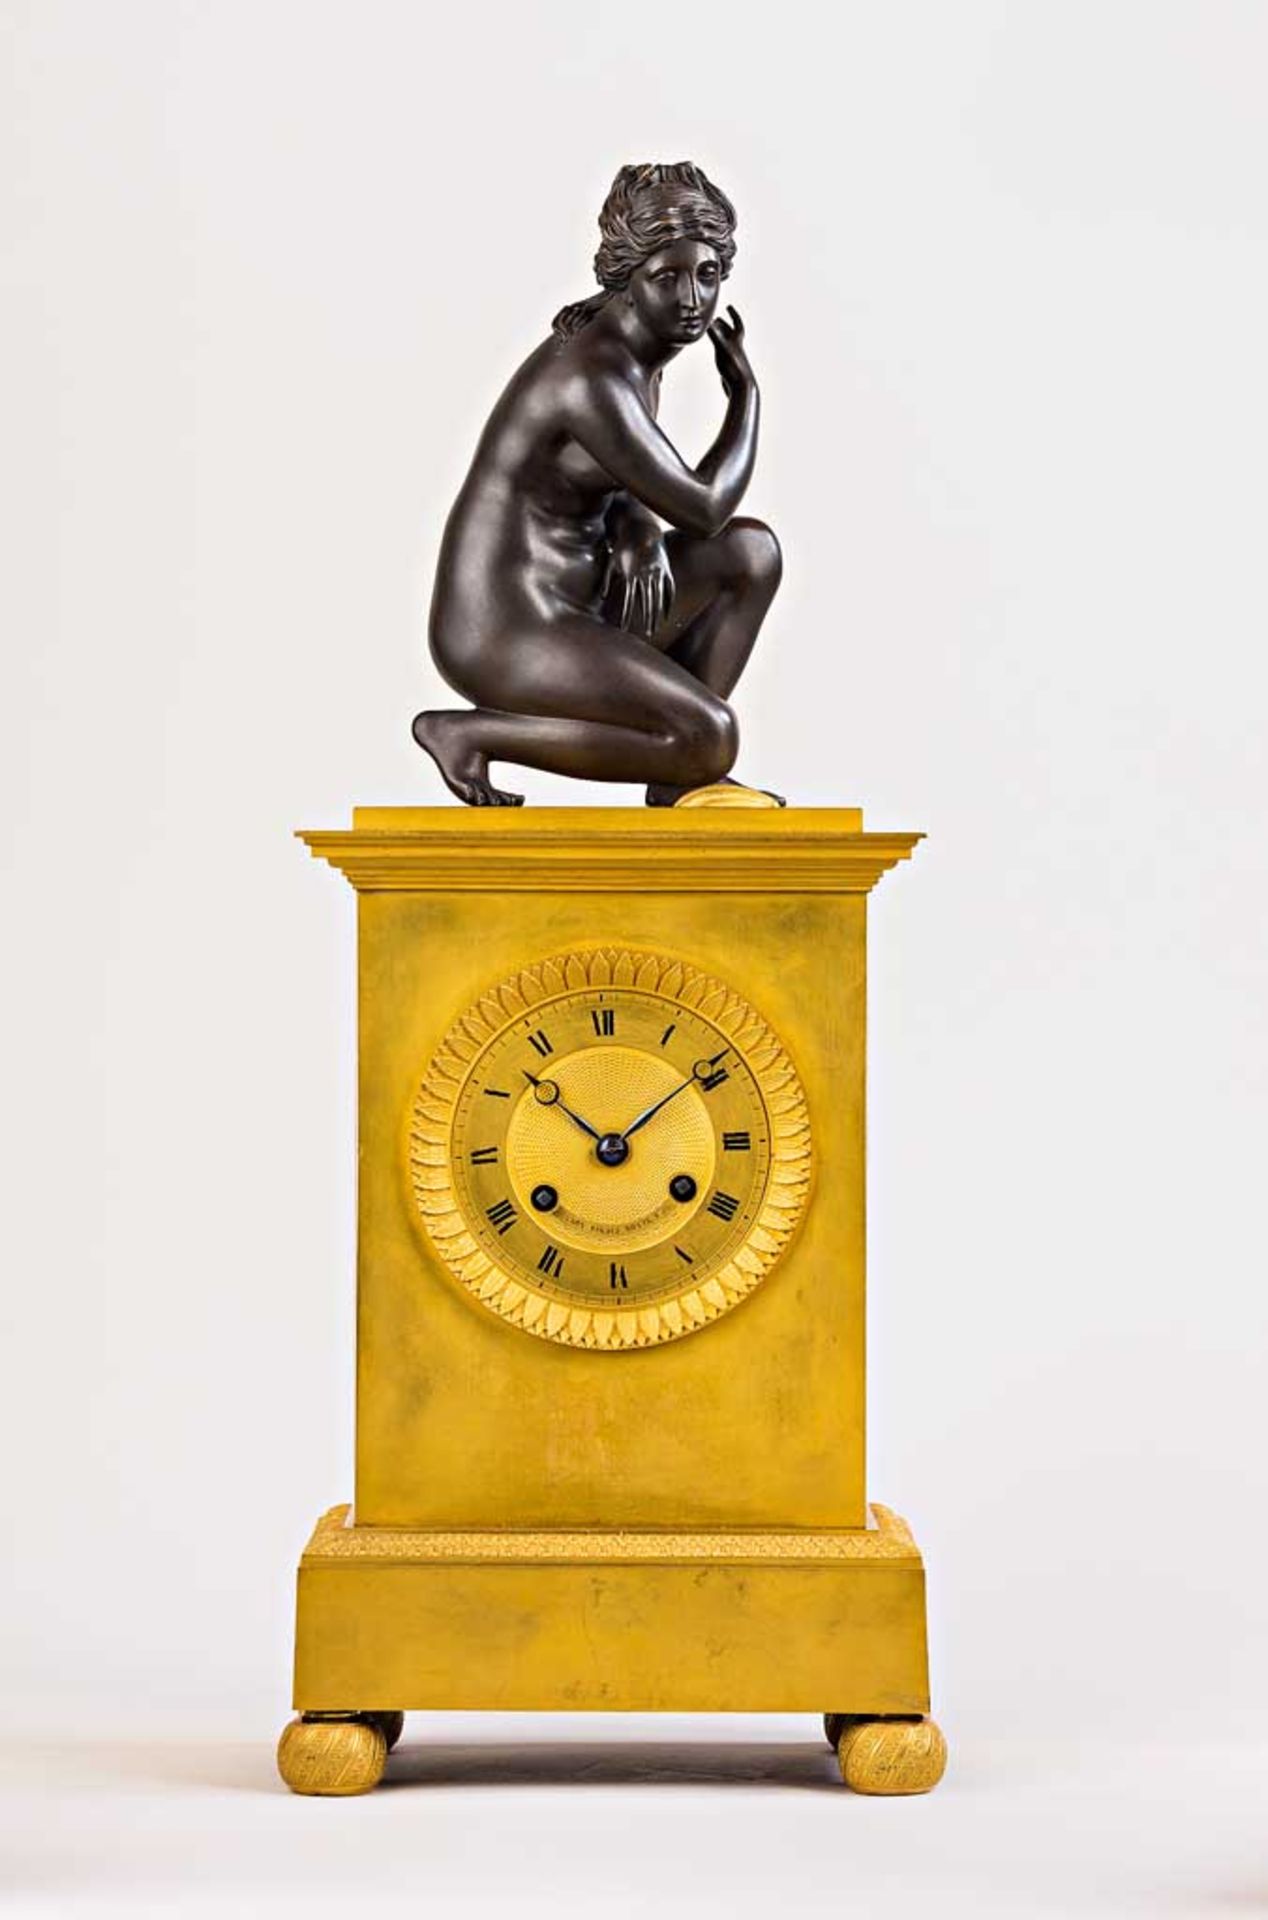 Feine Bronze-doré-Pendule. Metallzifferblatt, bez. "Le Roy Palais Royal No. 114" (siehe Tardy, S.